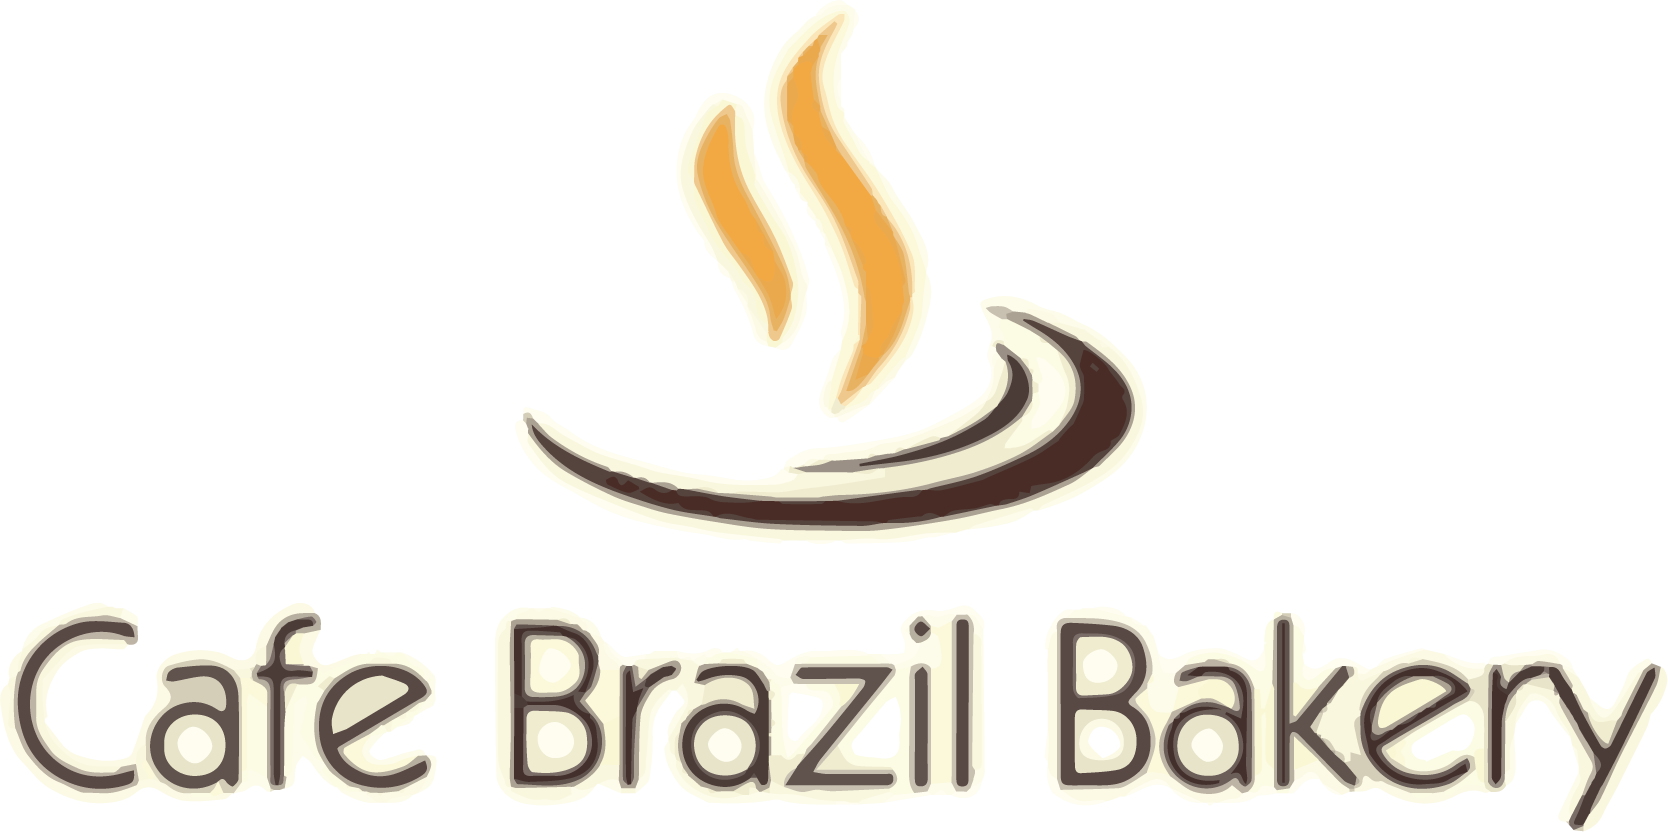 Cafe Brazil Home